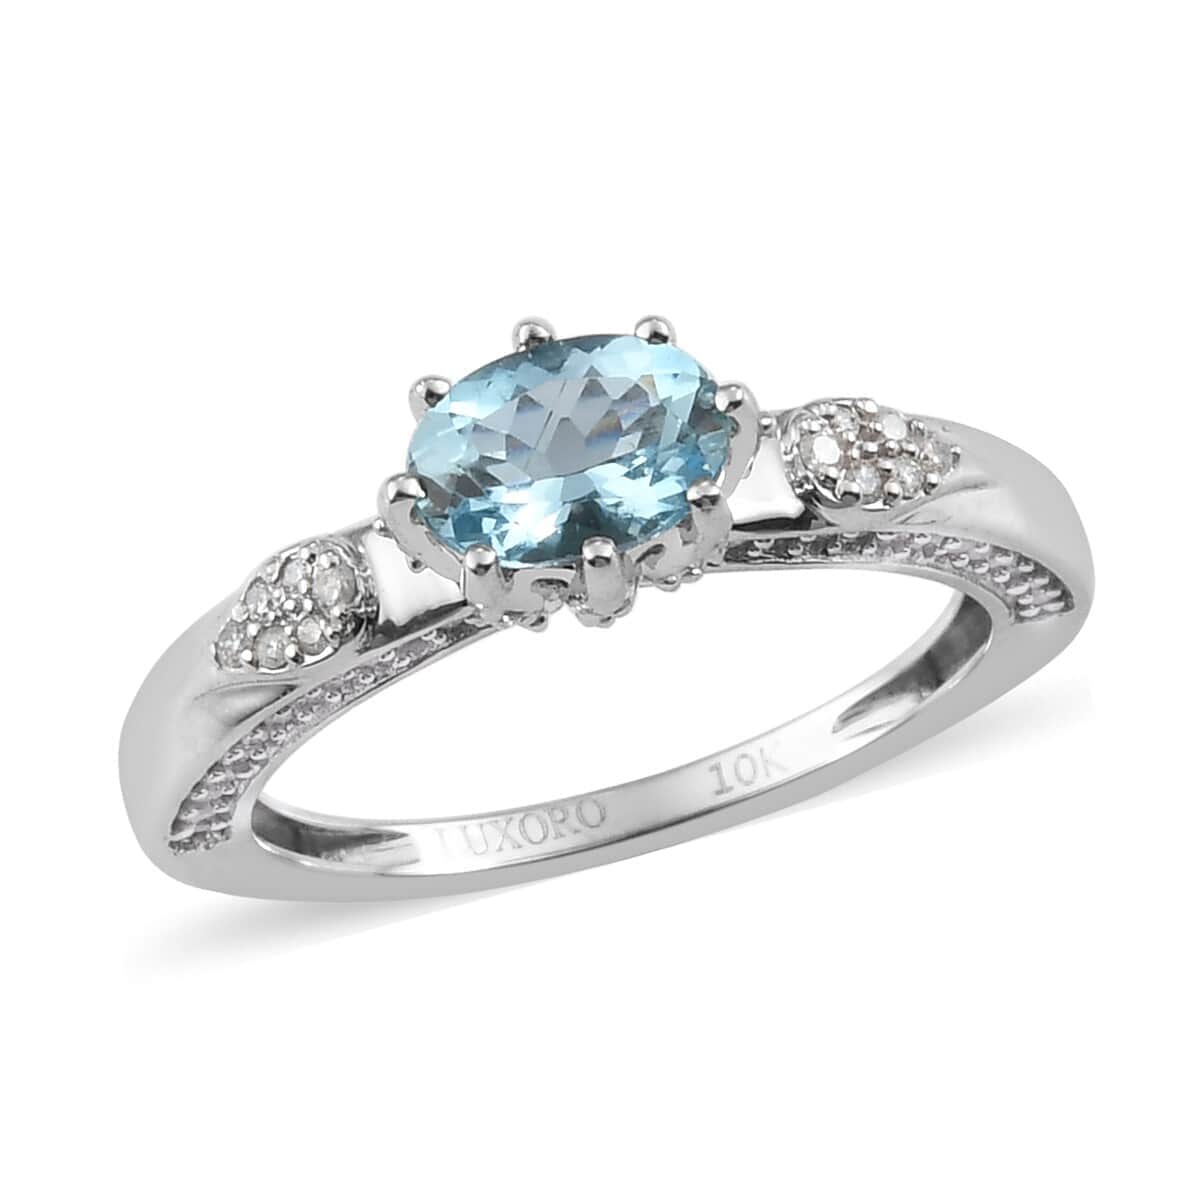 Luxoro 10K White Gold Premium Santa Maria Aquamarine and Diamond Ring (Size 8.0) 1.10 ctw image number 0